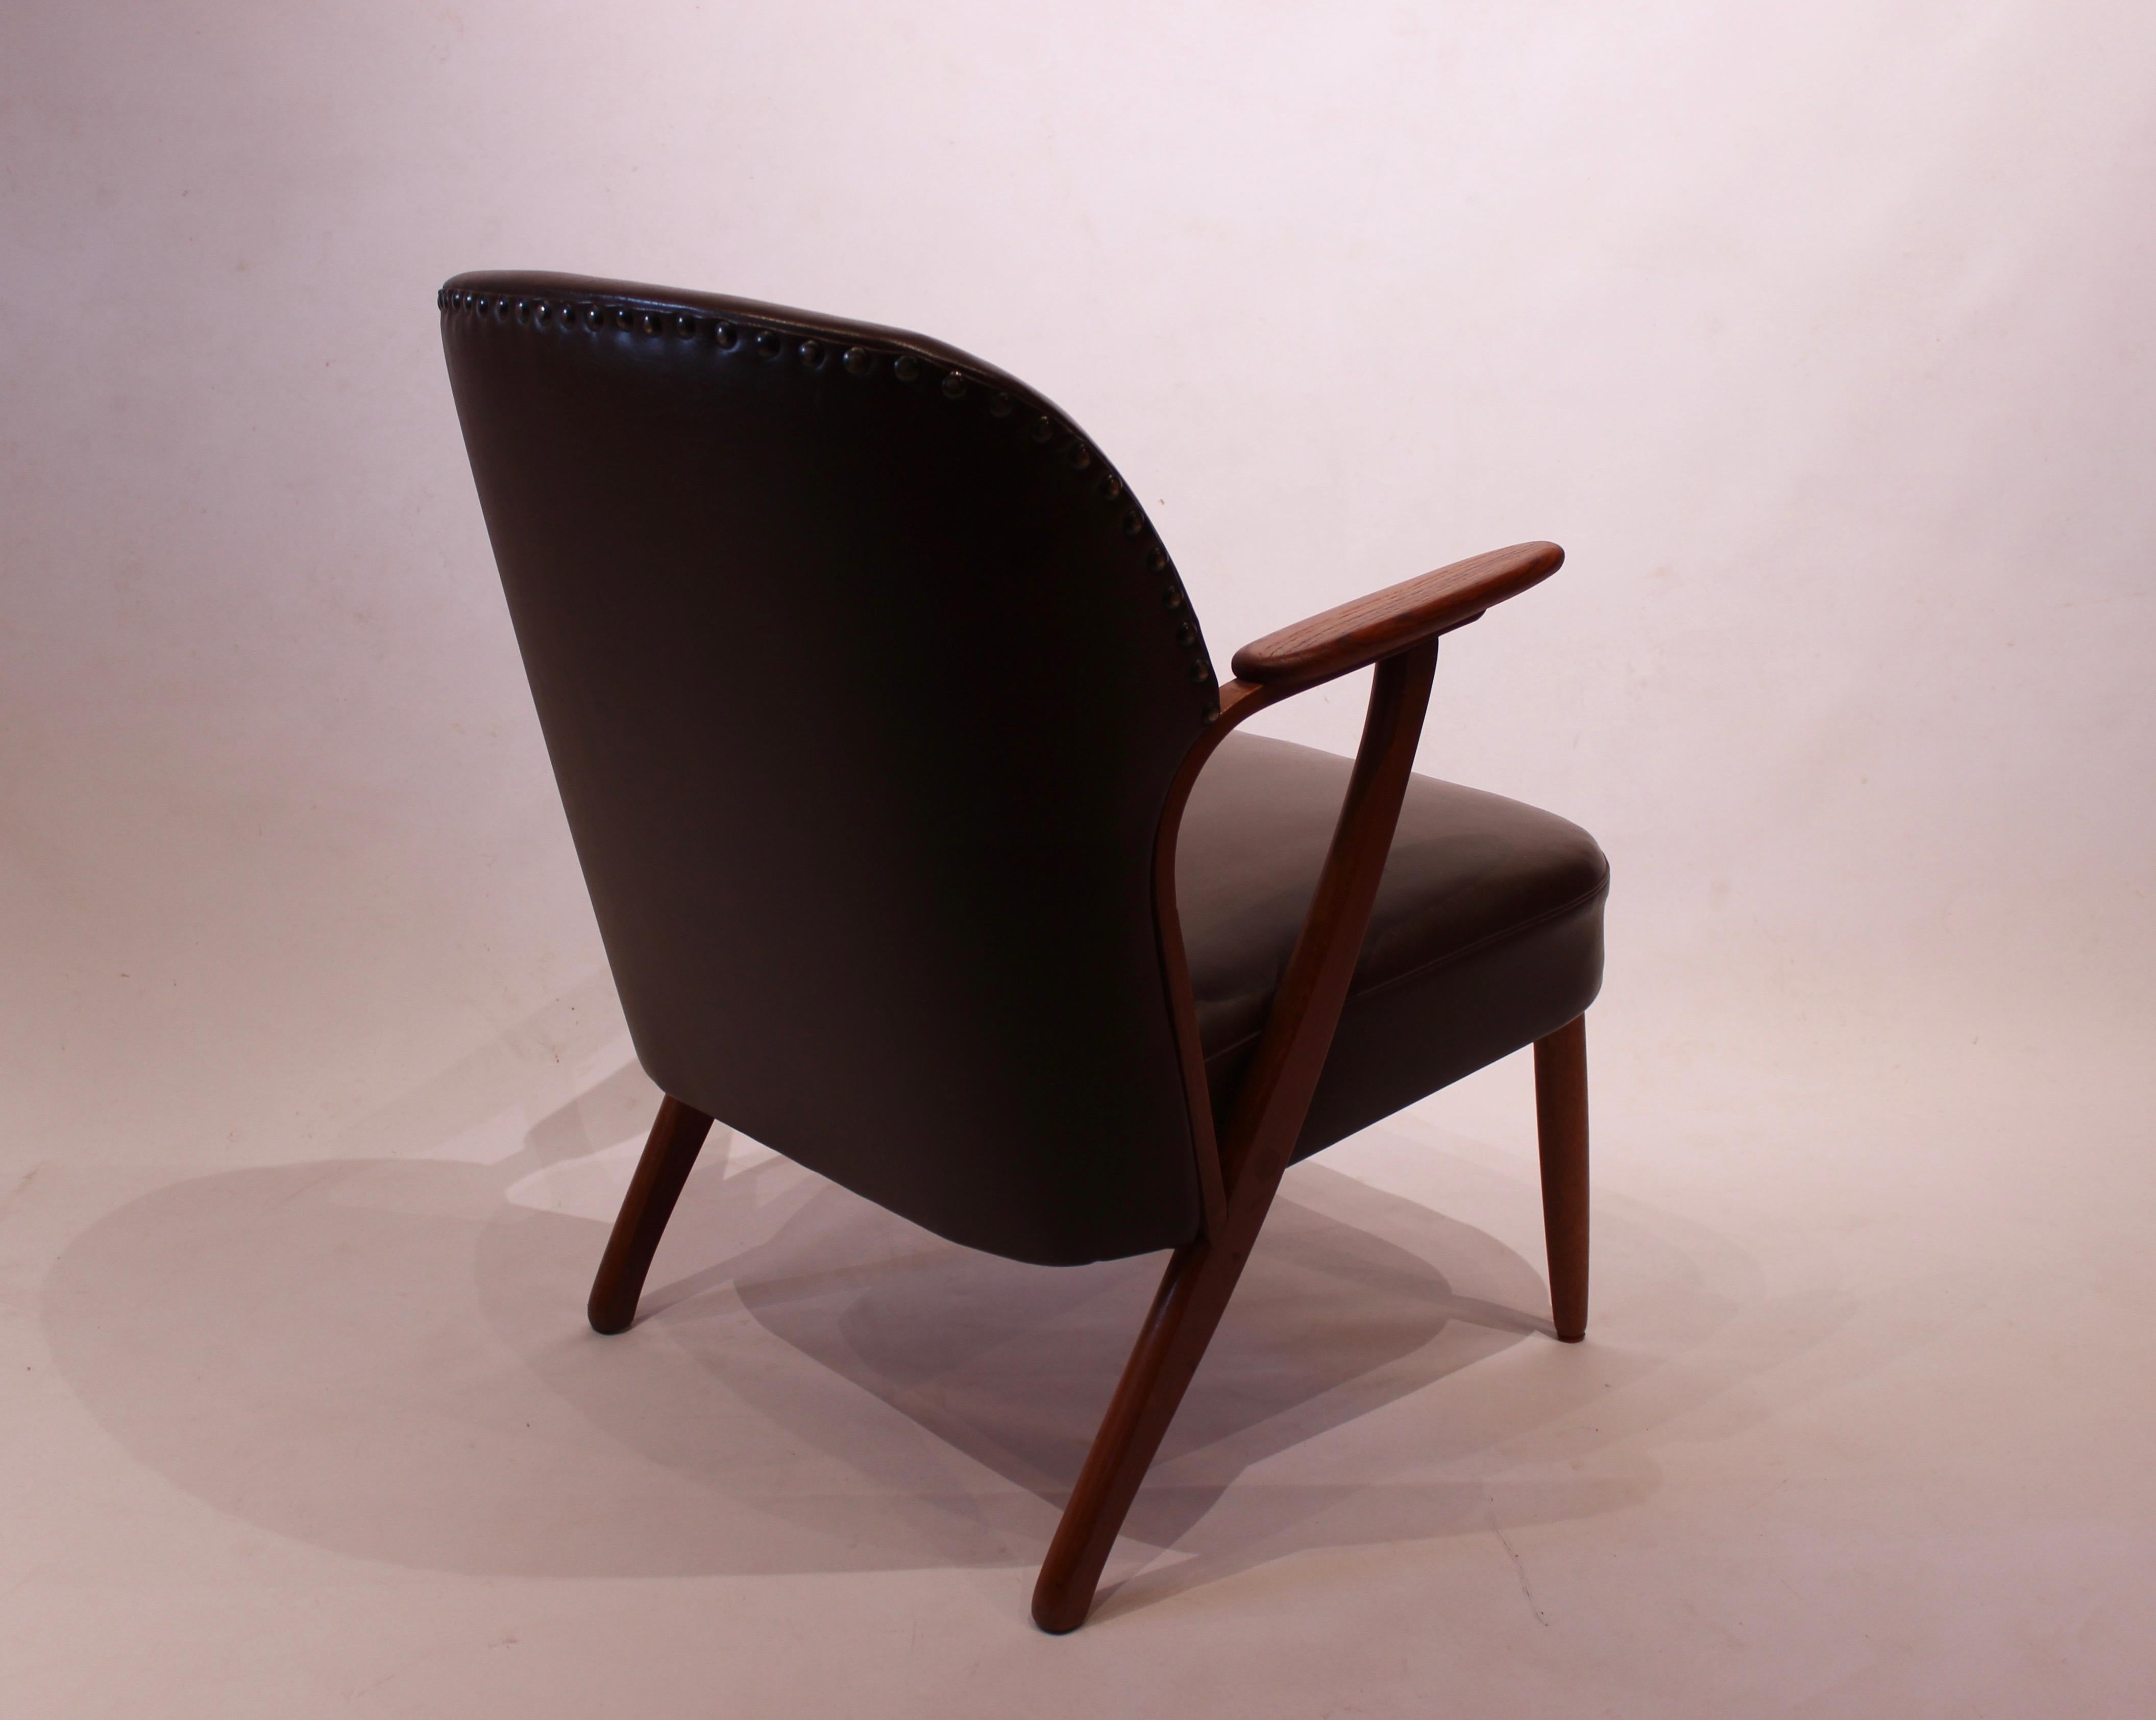 Scandinavian Modern Easy Chair of Dark Brown Patinated Leather and Teak, Danish Design, 1940s